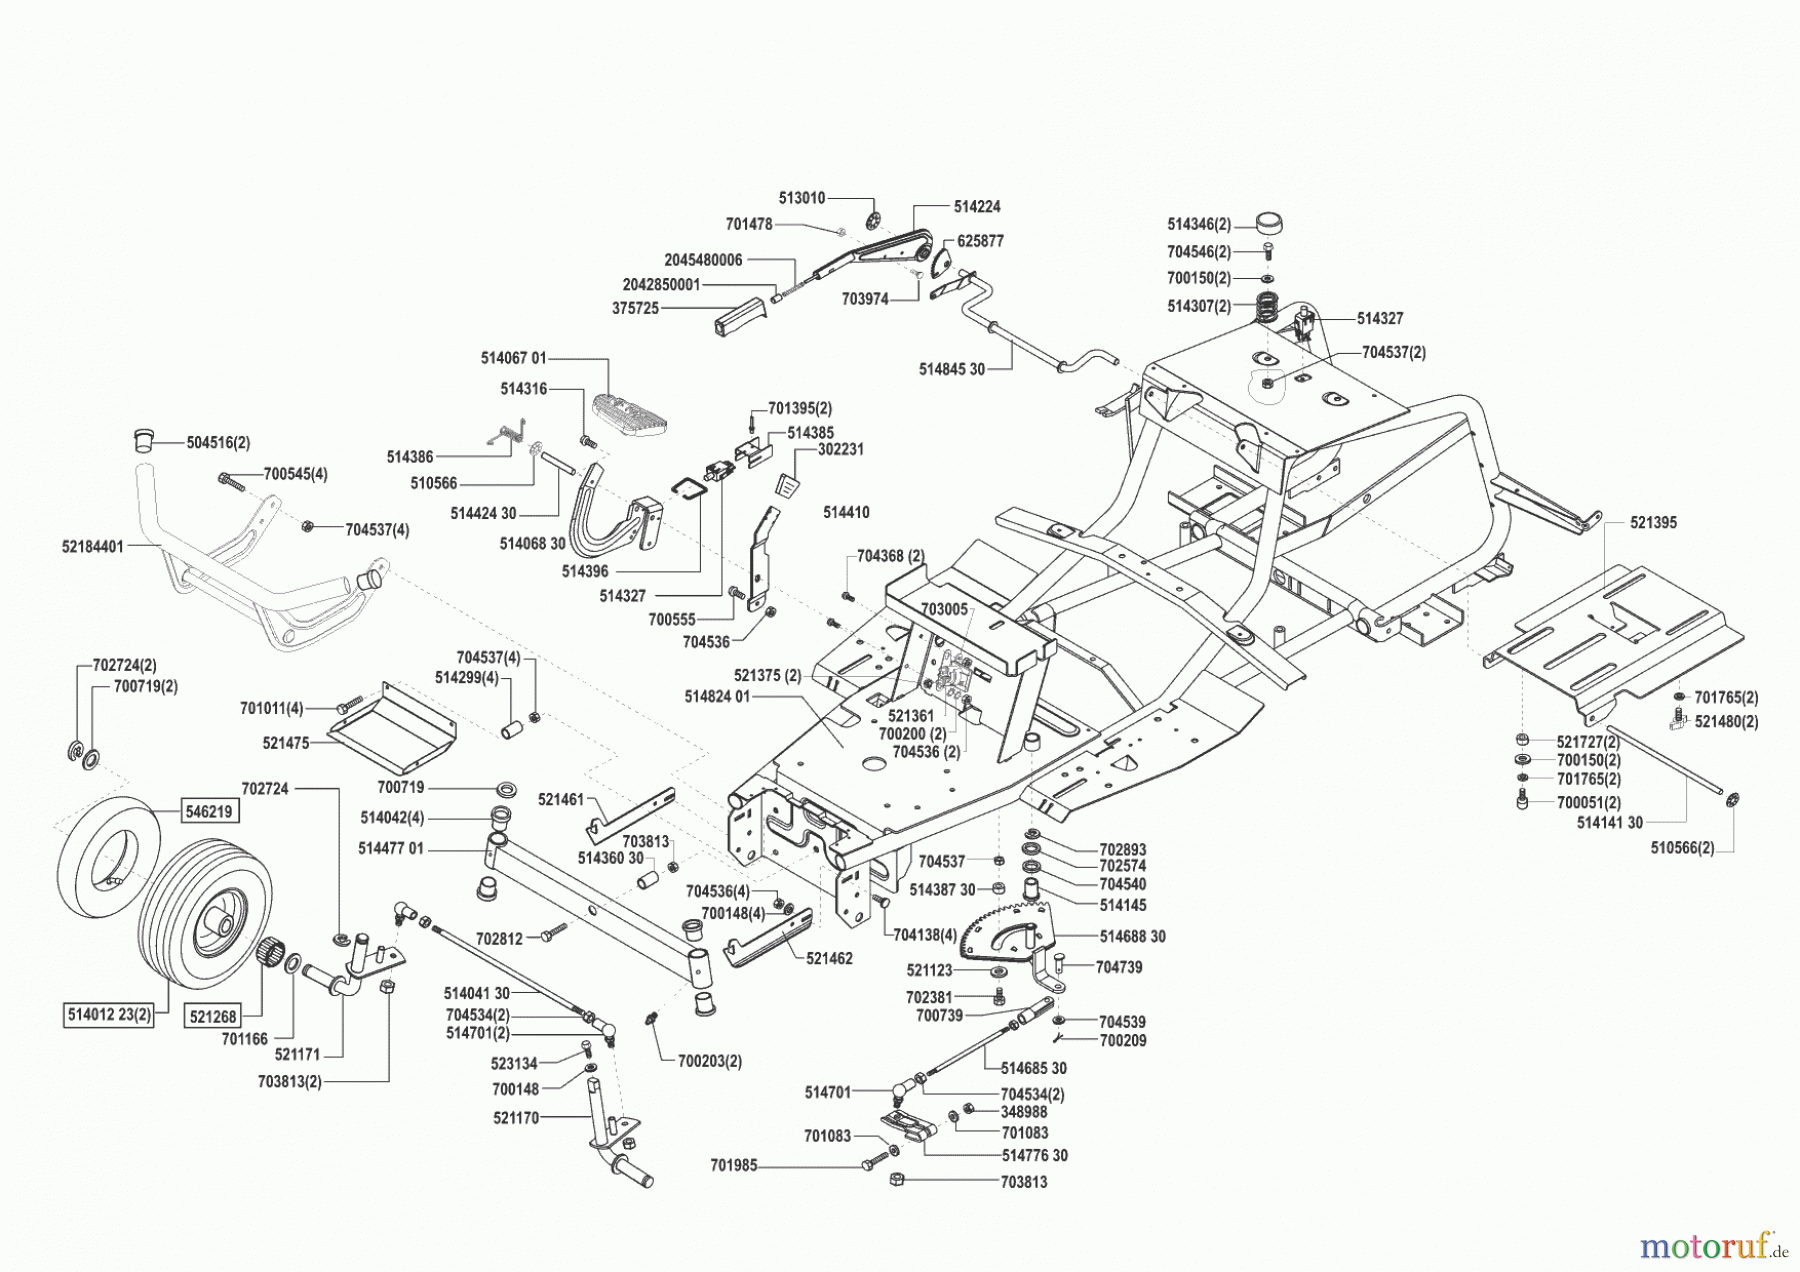  Sigma Gartentechnik Rasentraktor T18-102 SG Seite 2